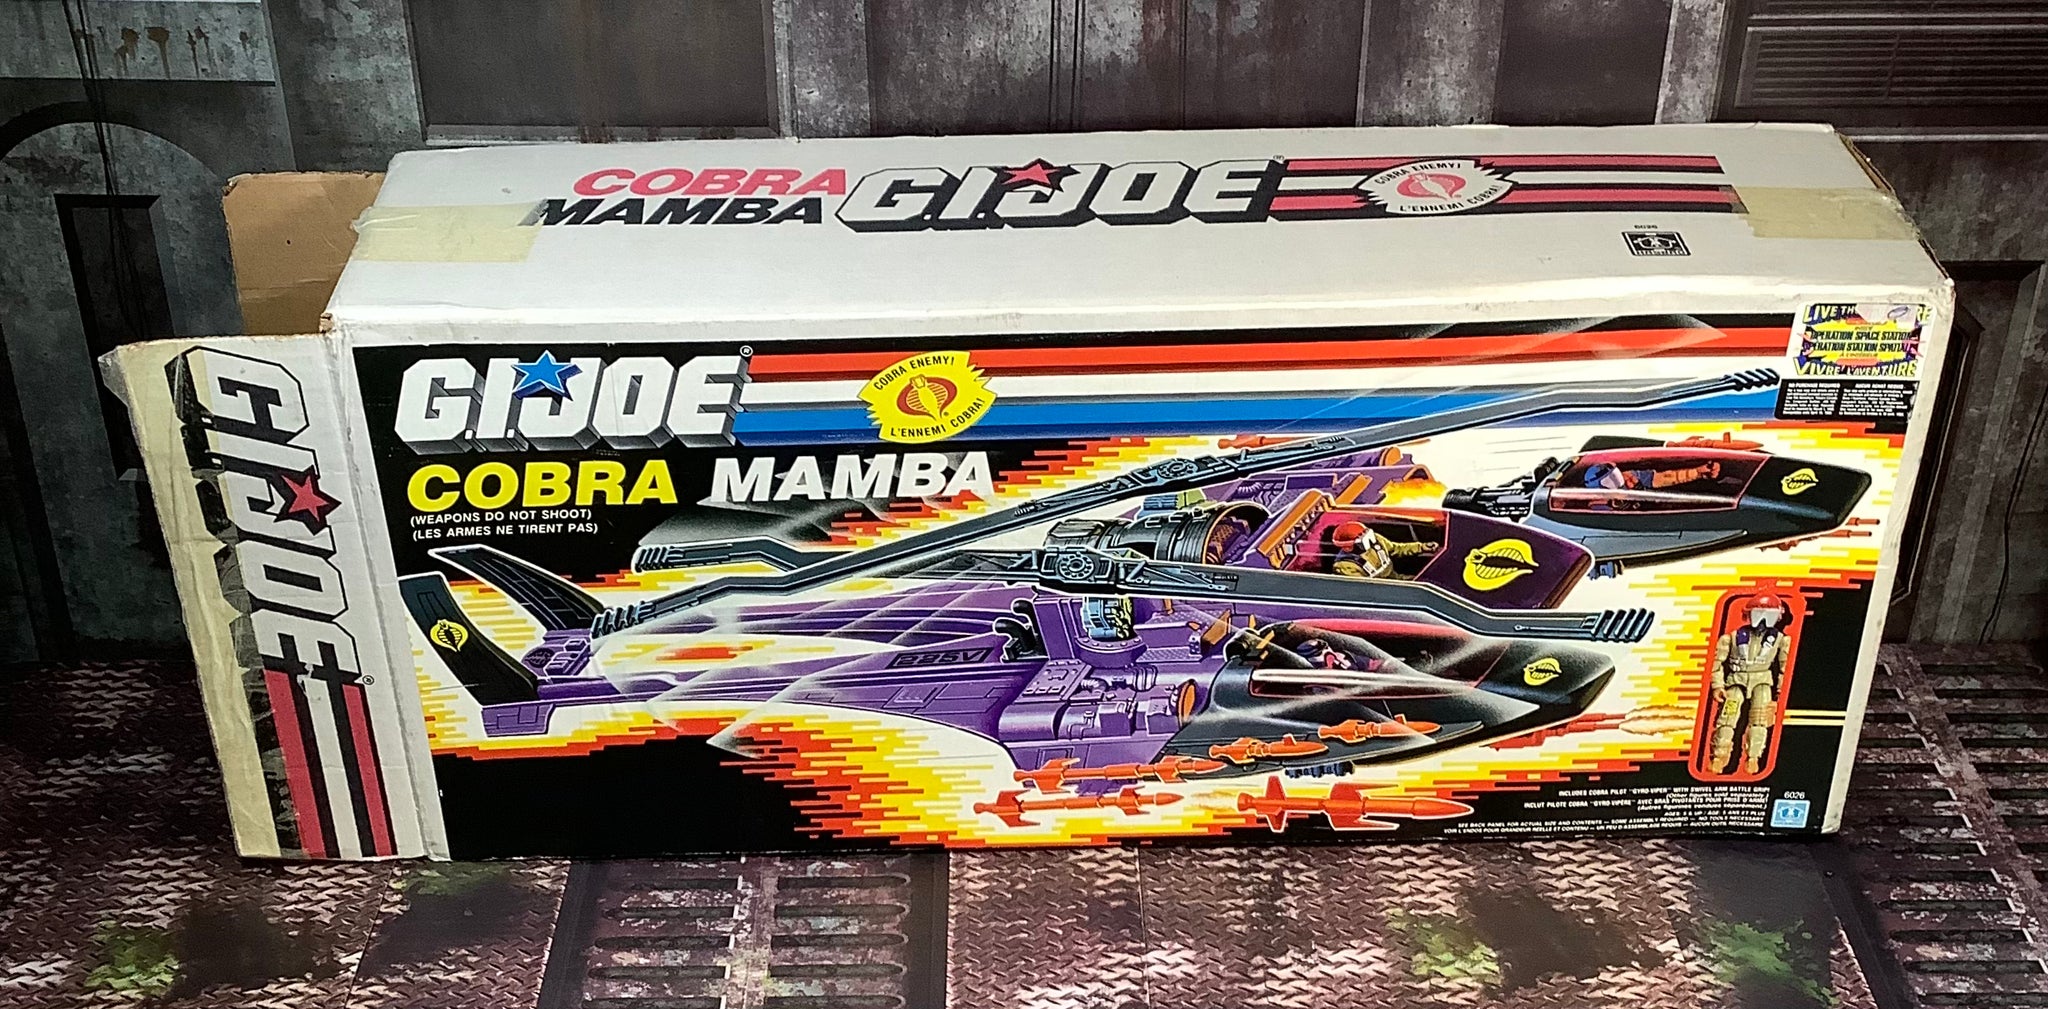 Cobra Mamba and Gyro-Viper